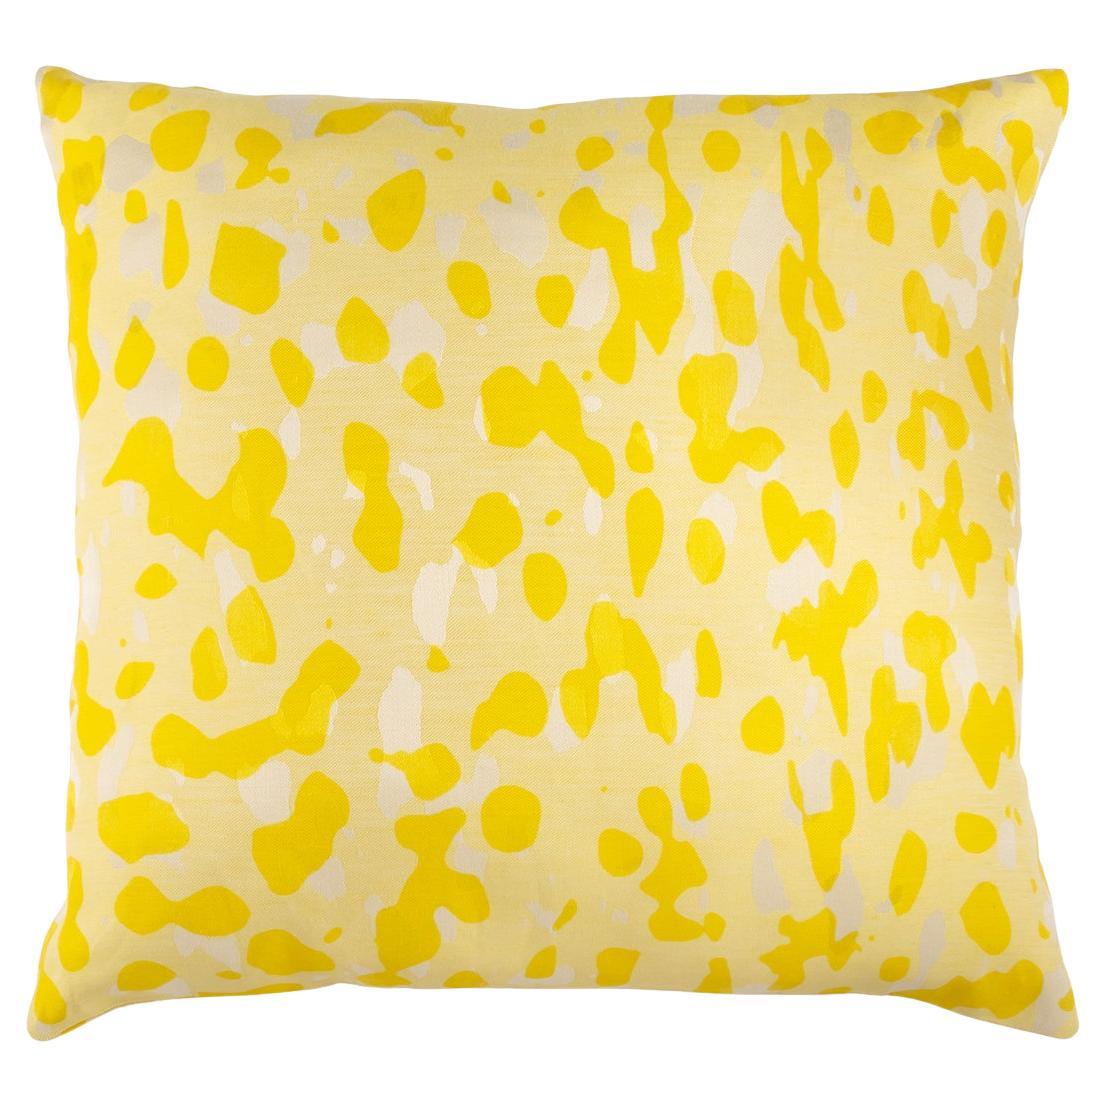 Macchia su Macchia Pineapple Jacquard Cushion 50x50cm by Stories of Italy For Sale